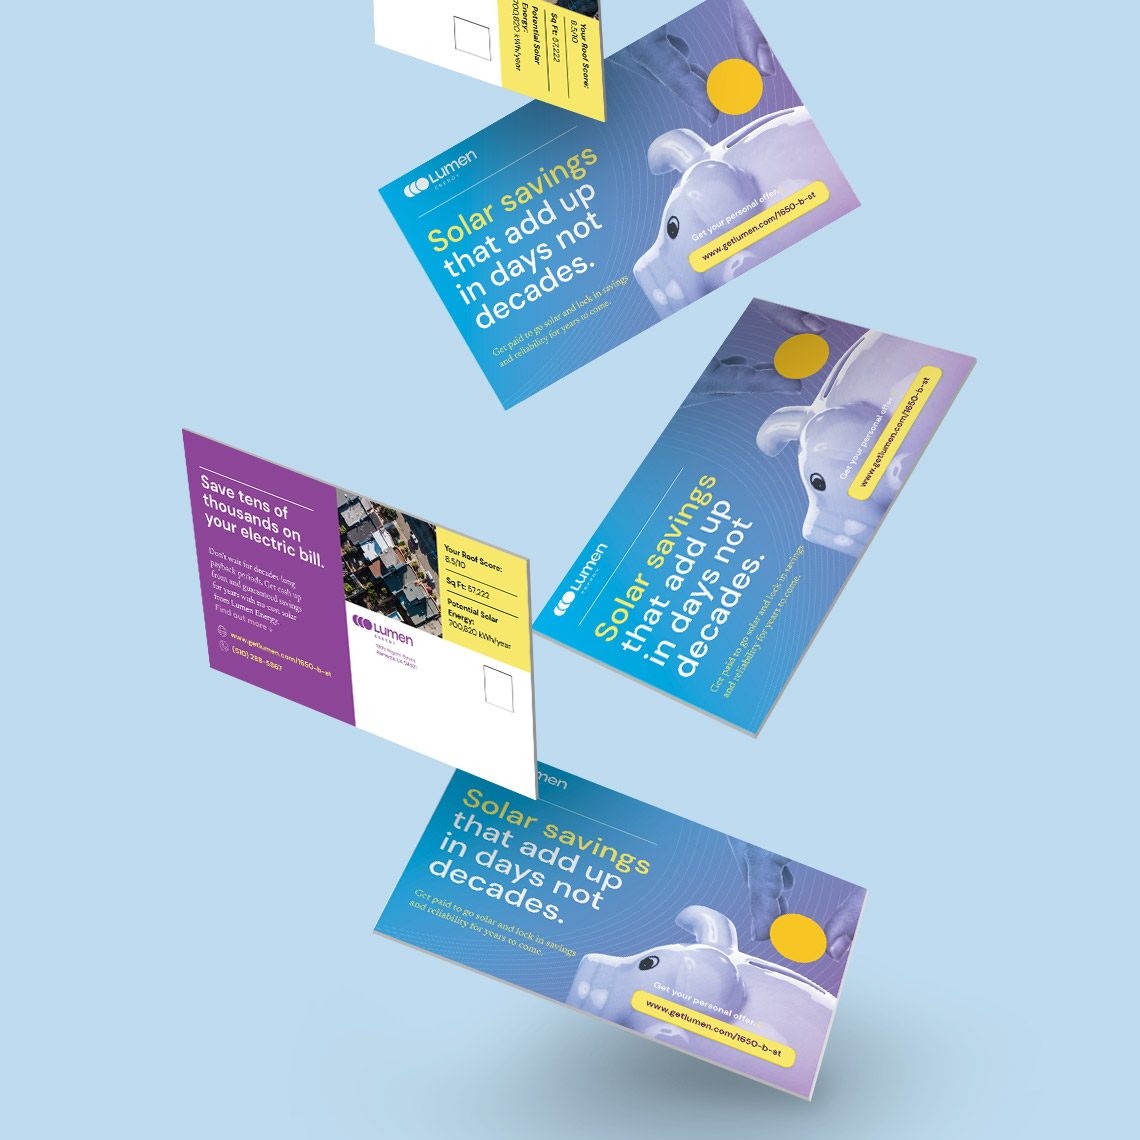 Sales postcard for Lumen Energy designed by Kilter